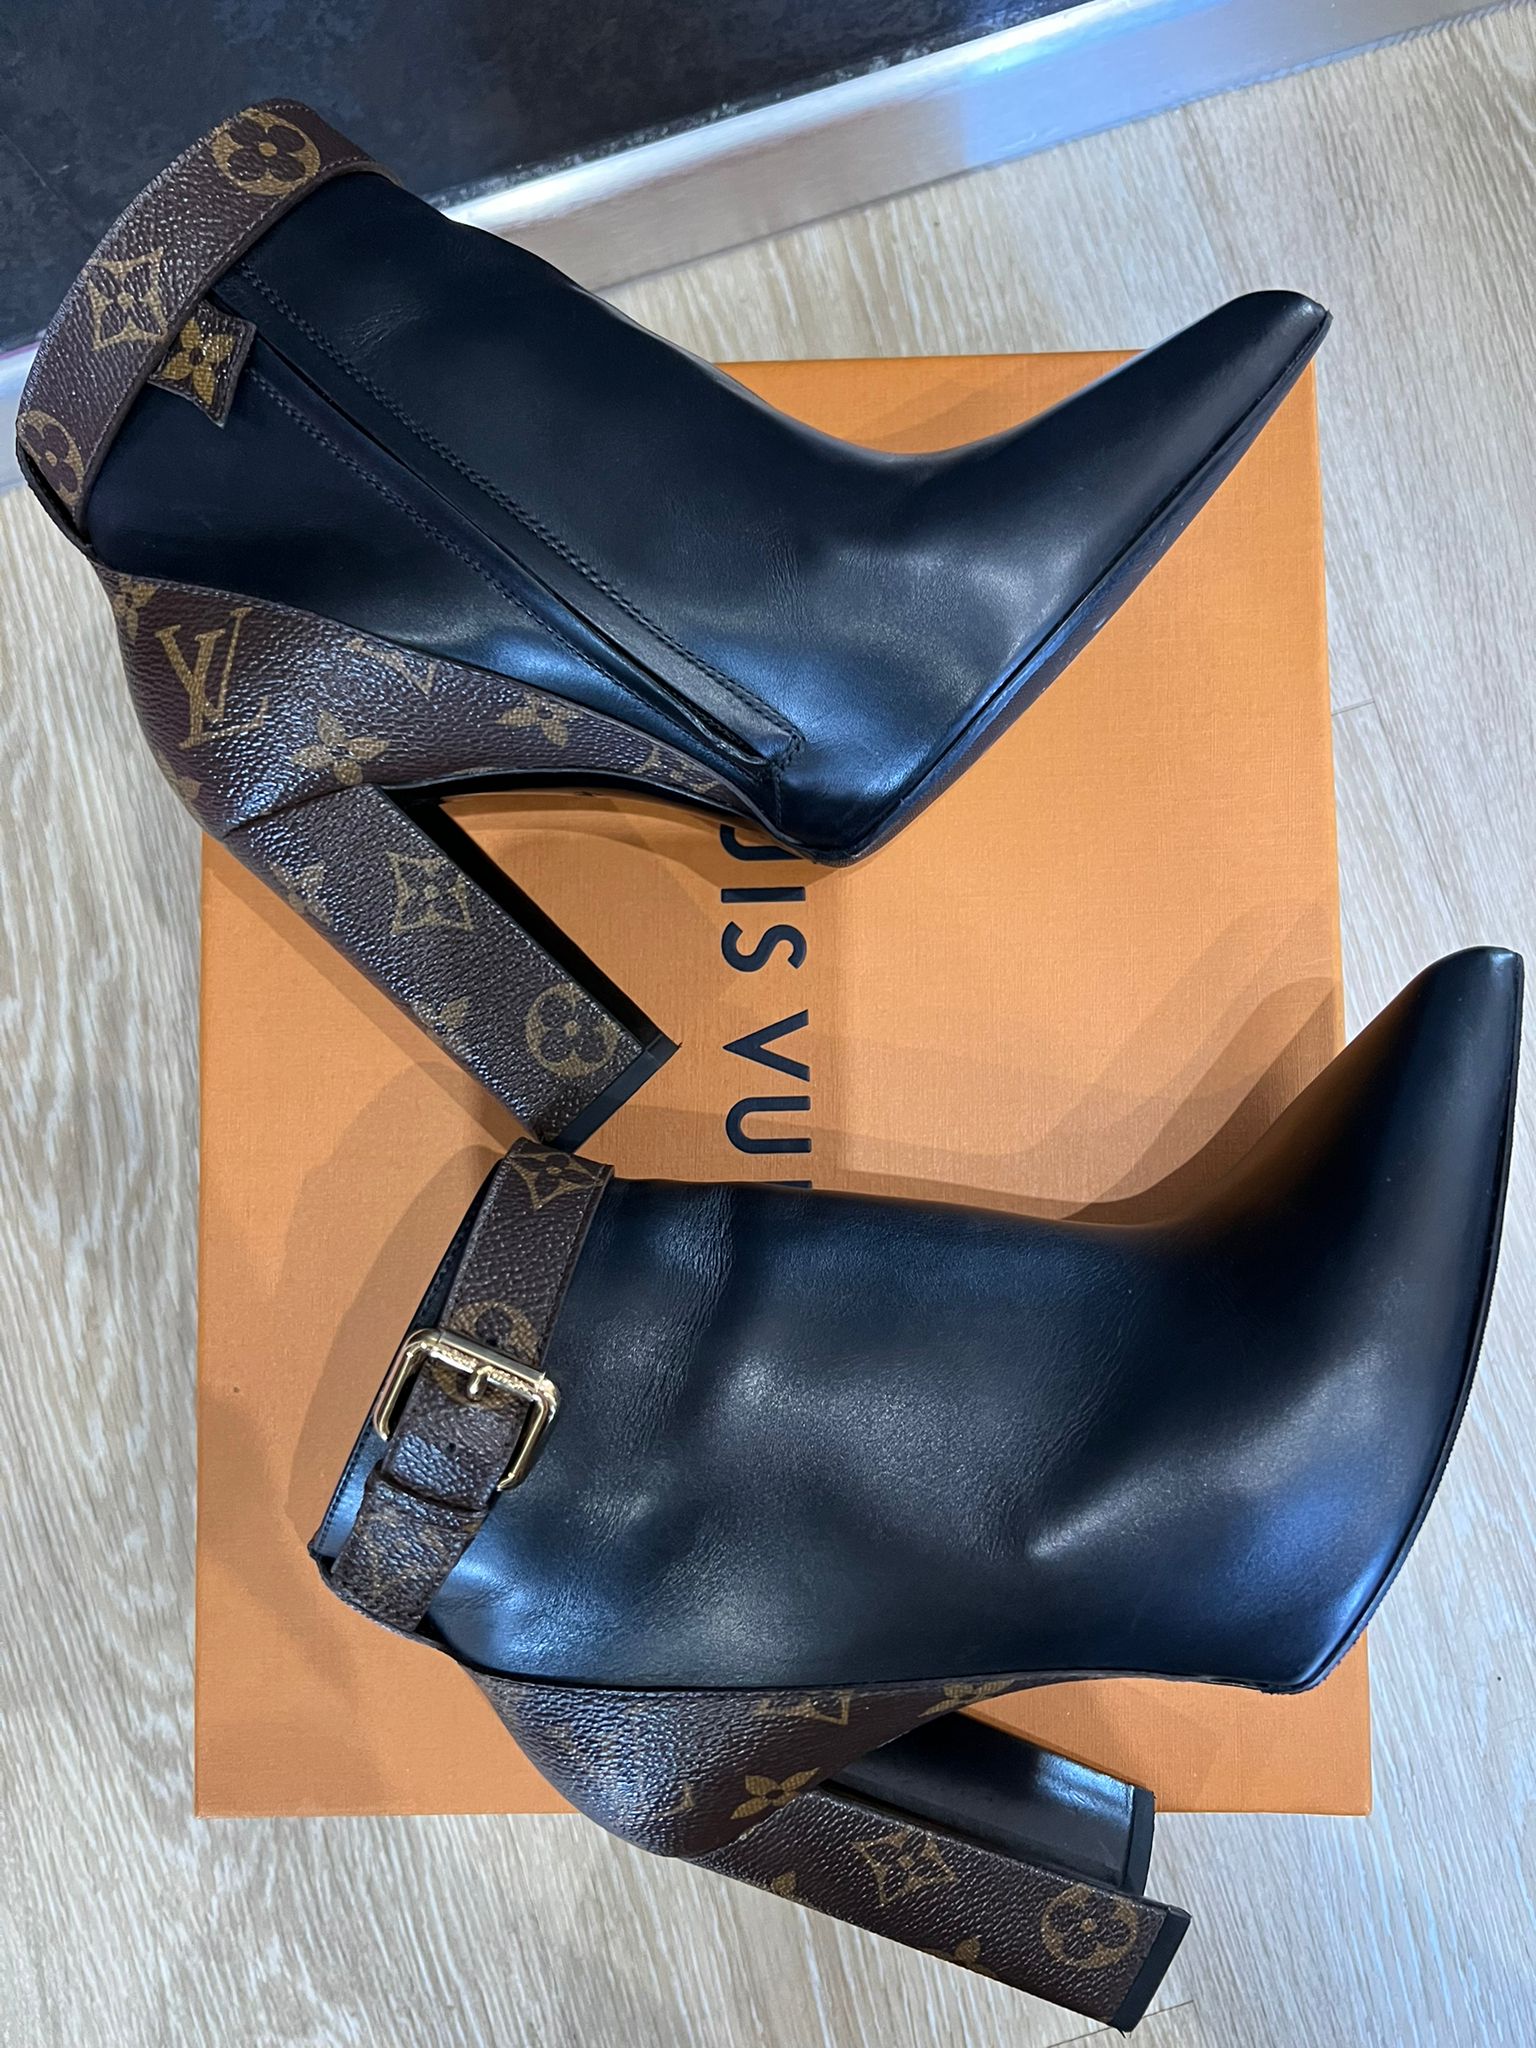 Louis Vuitton Matchmake Low Boots Size 38 